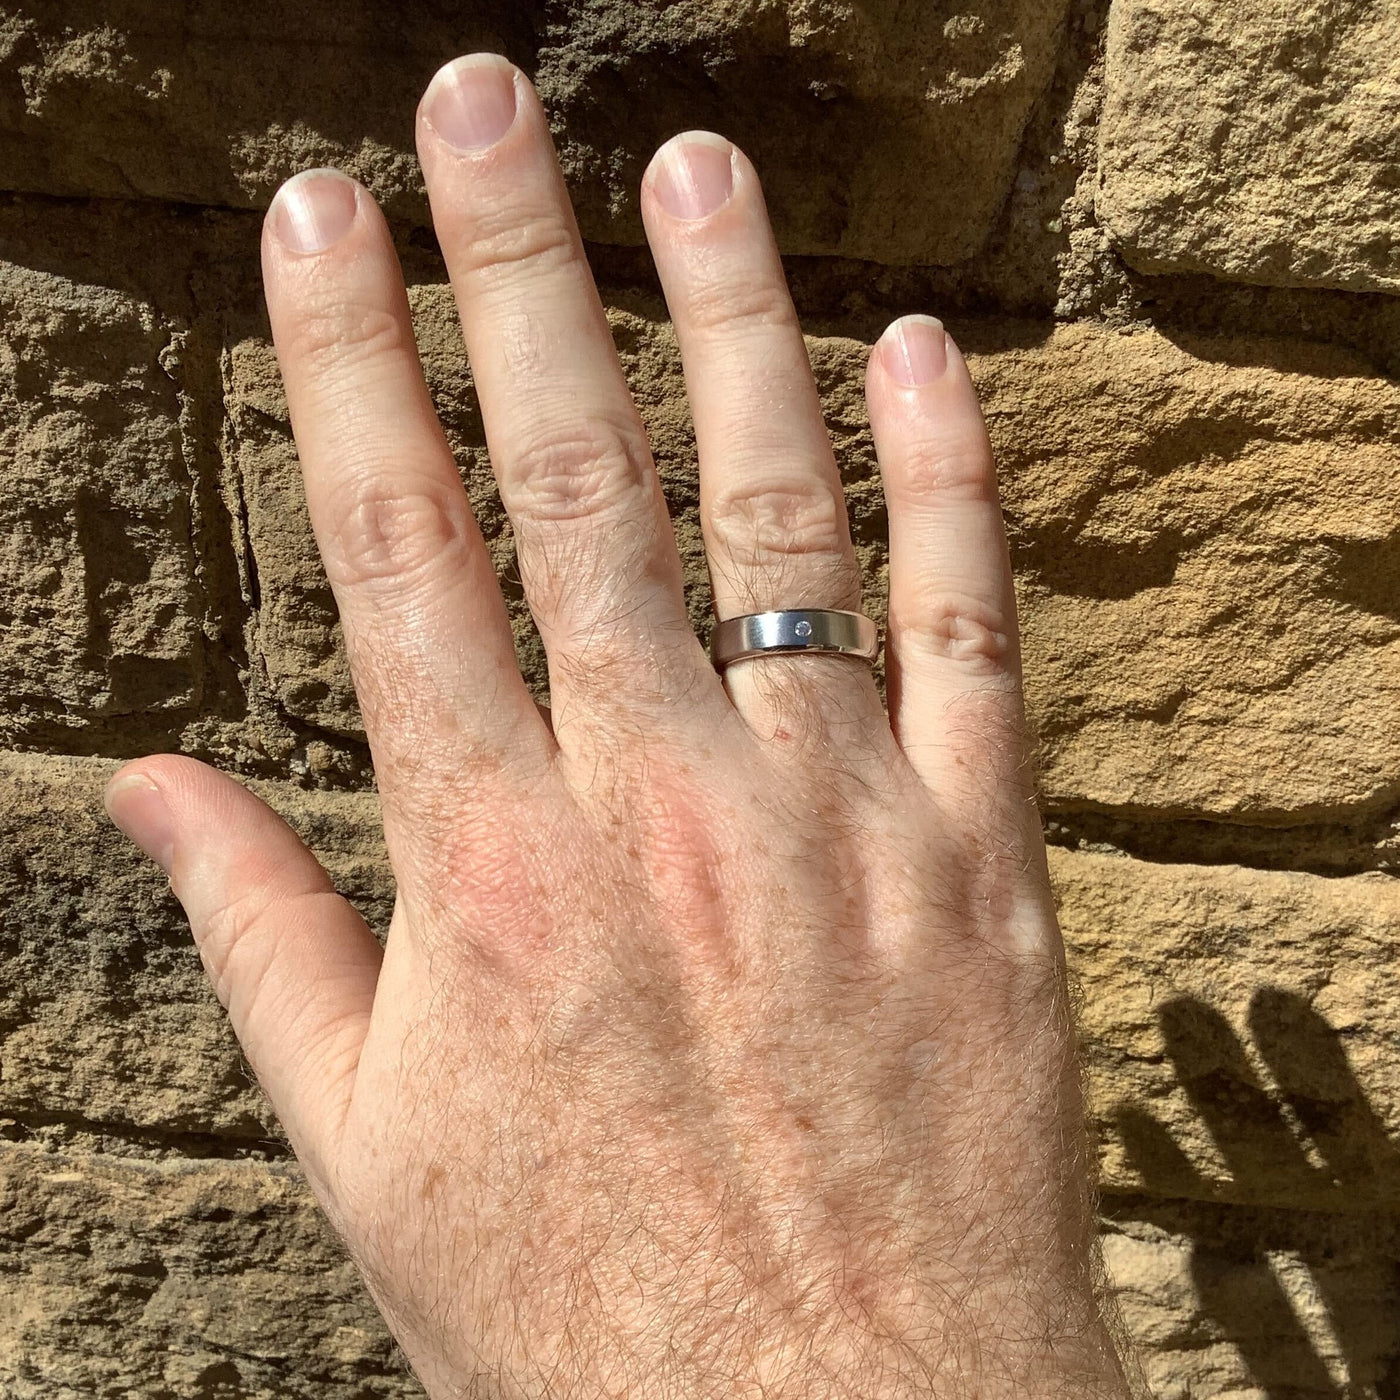 Edward - Diamond Set Wide Bevelled Edge Wedding Ring - Made-to-Order